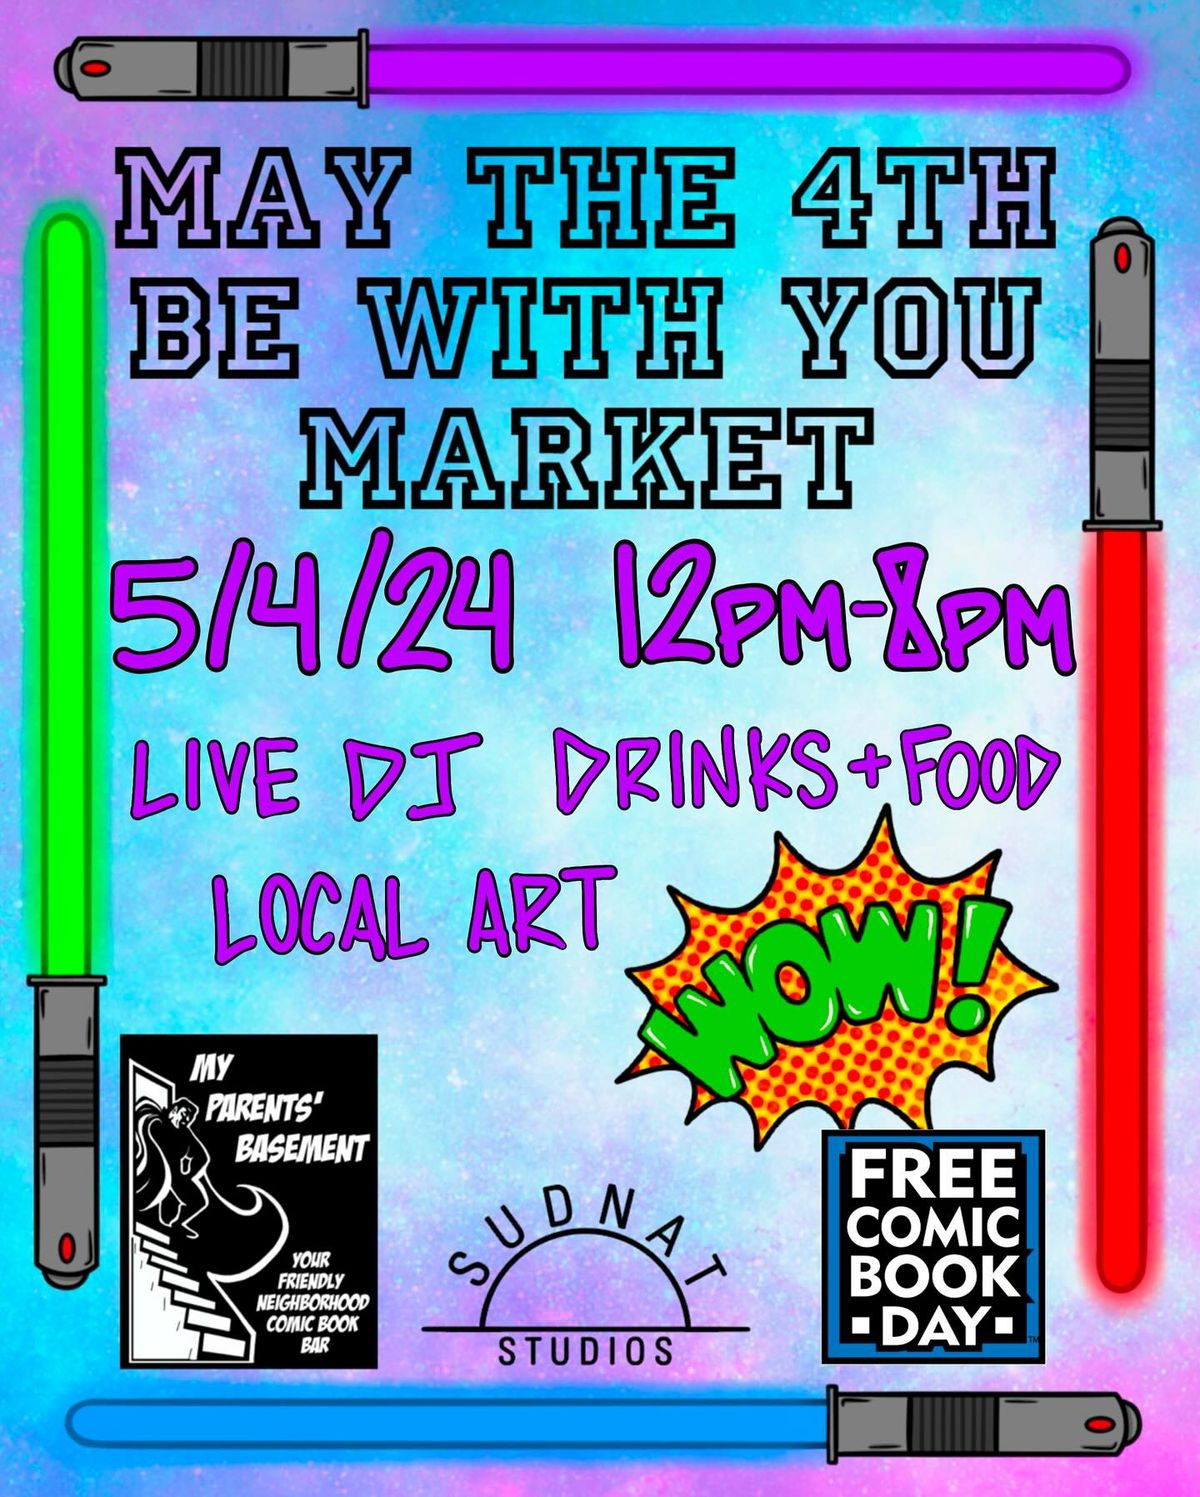 FREE Comic Book Day Art Market